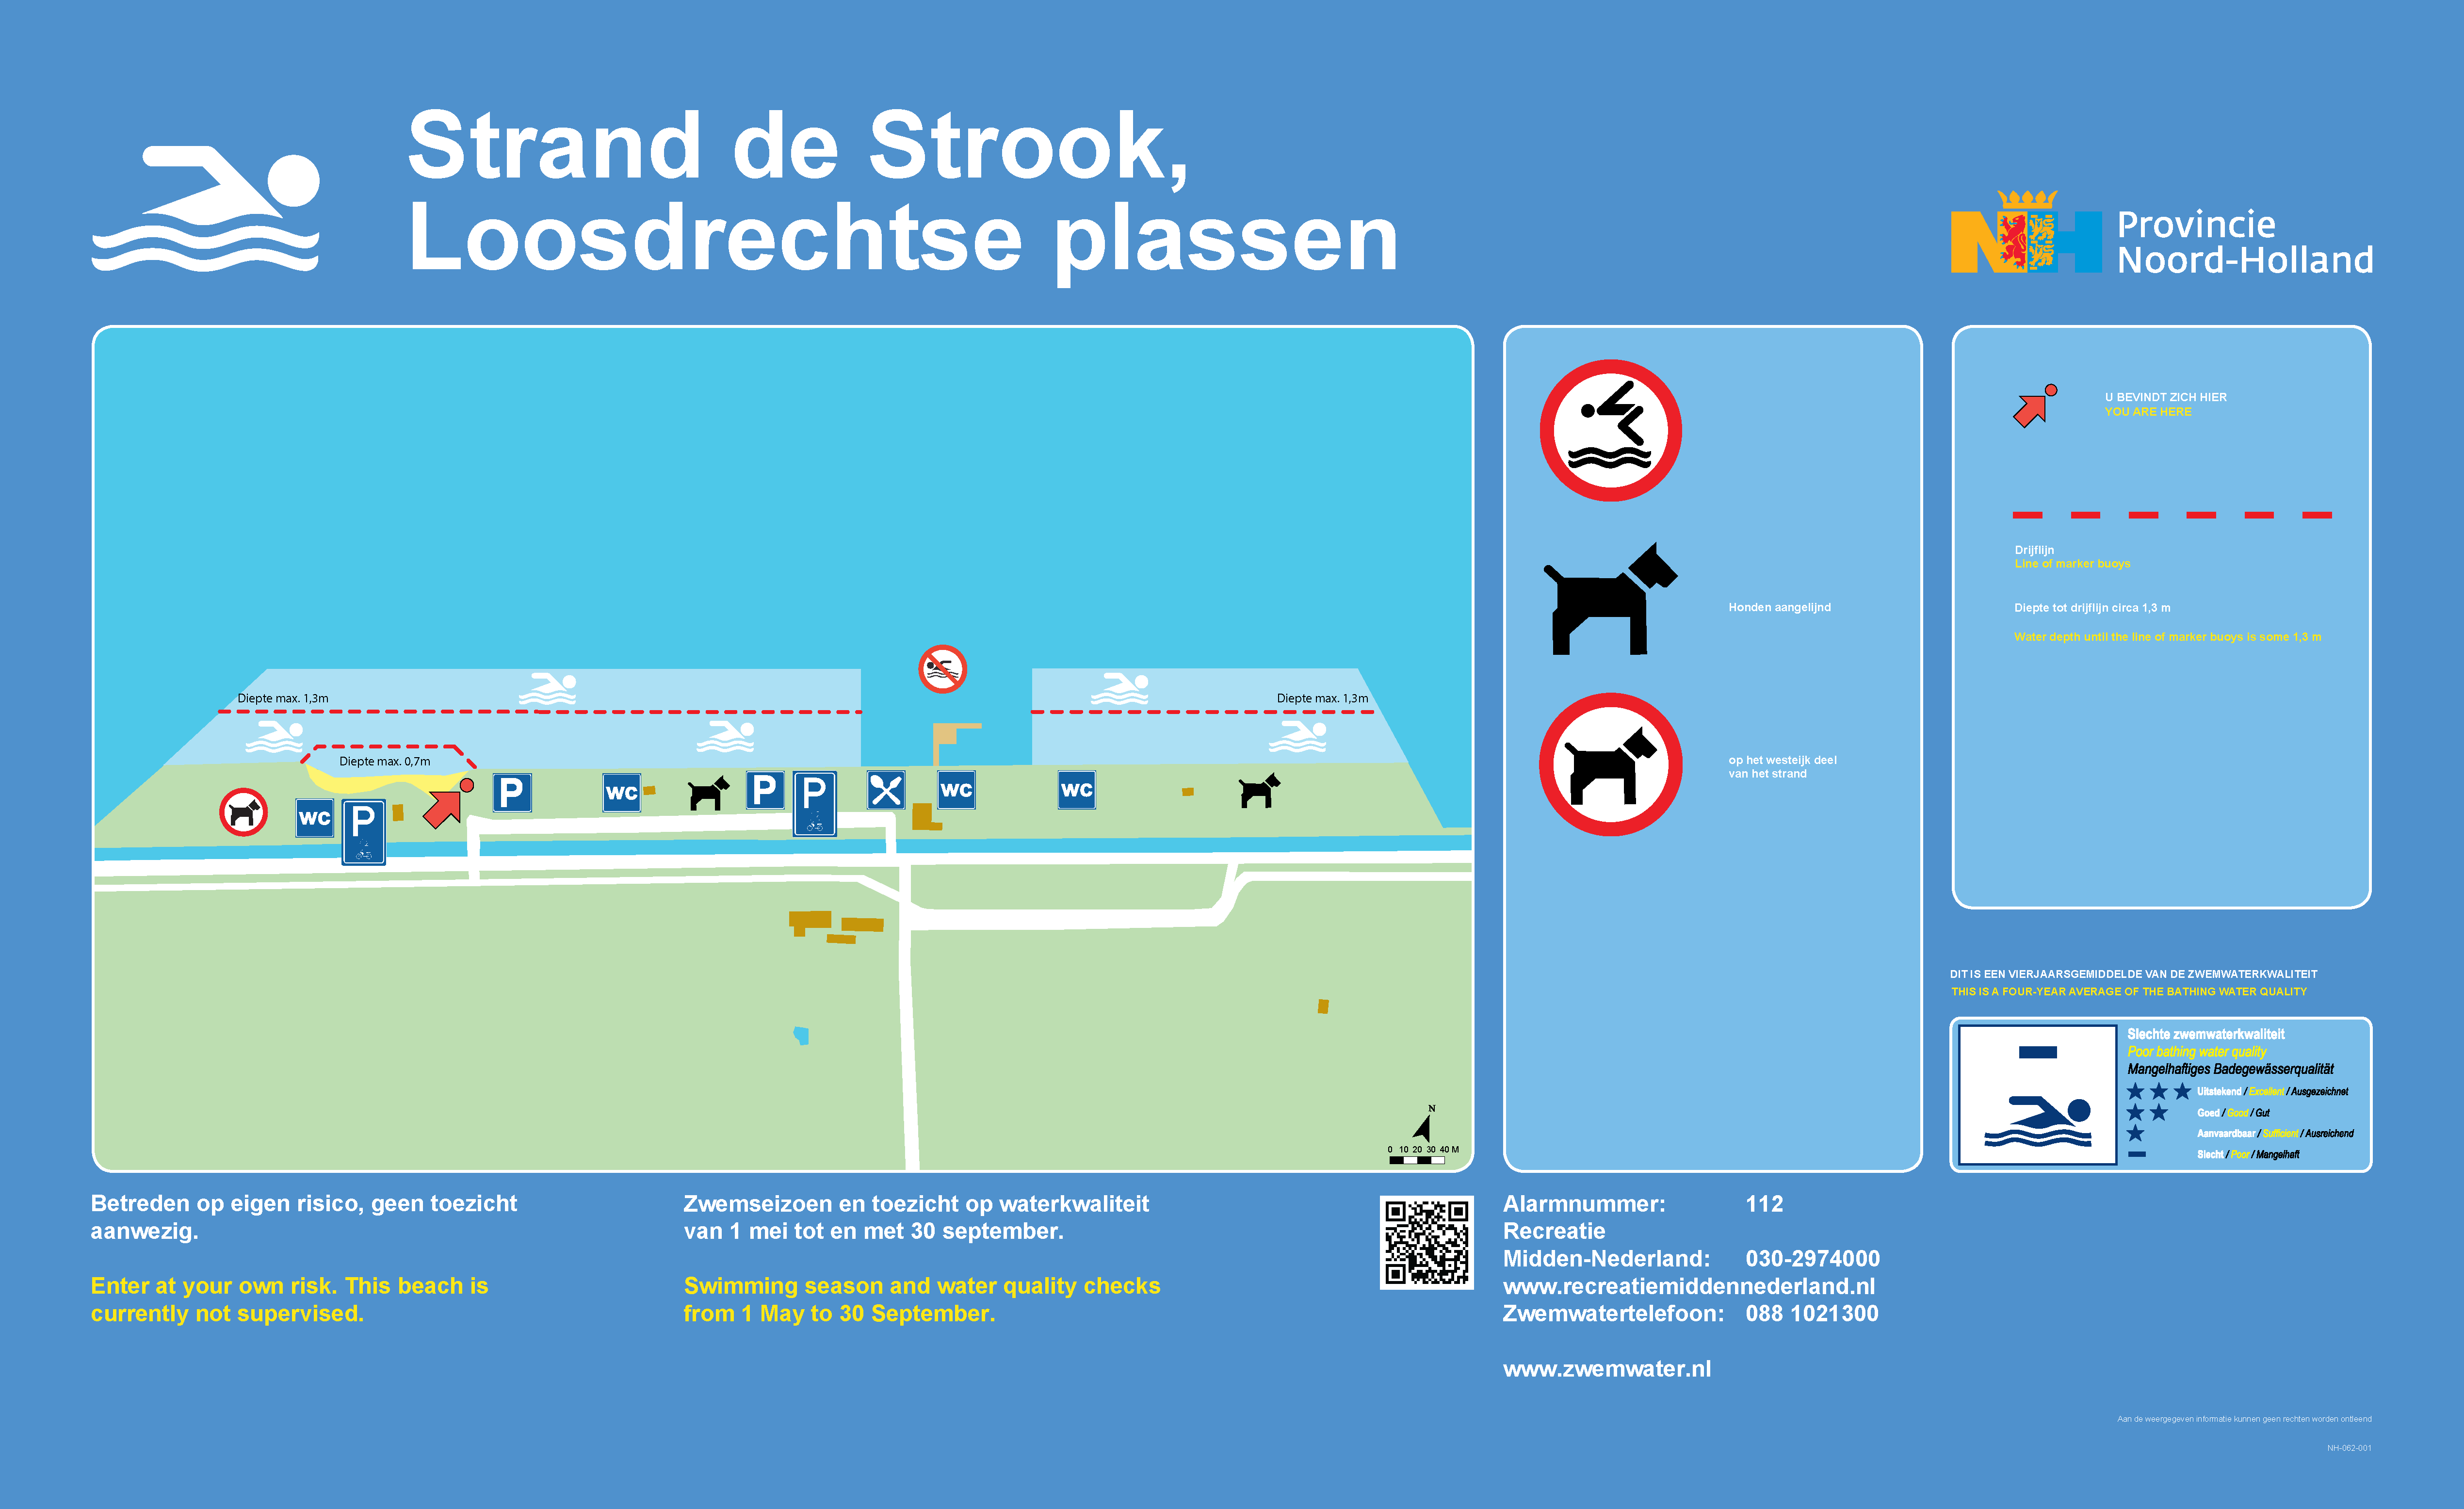 The information board at the swimming location Strand De Strook, peuterbad, Loosdrechtse plassen